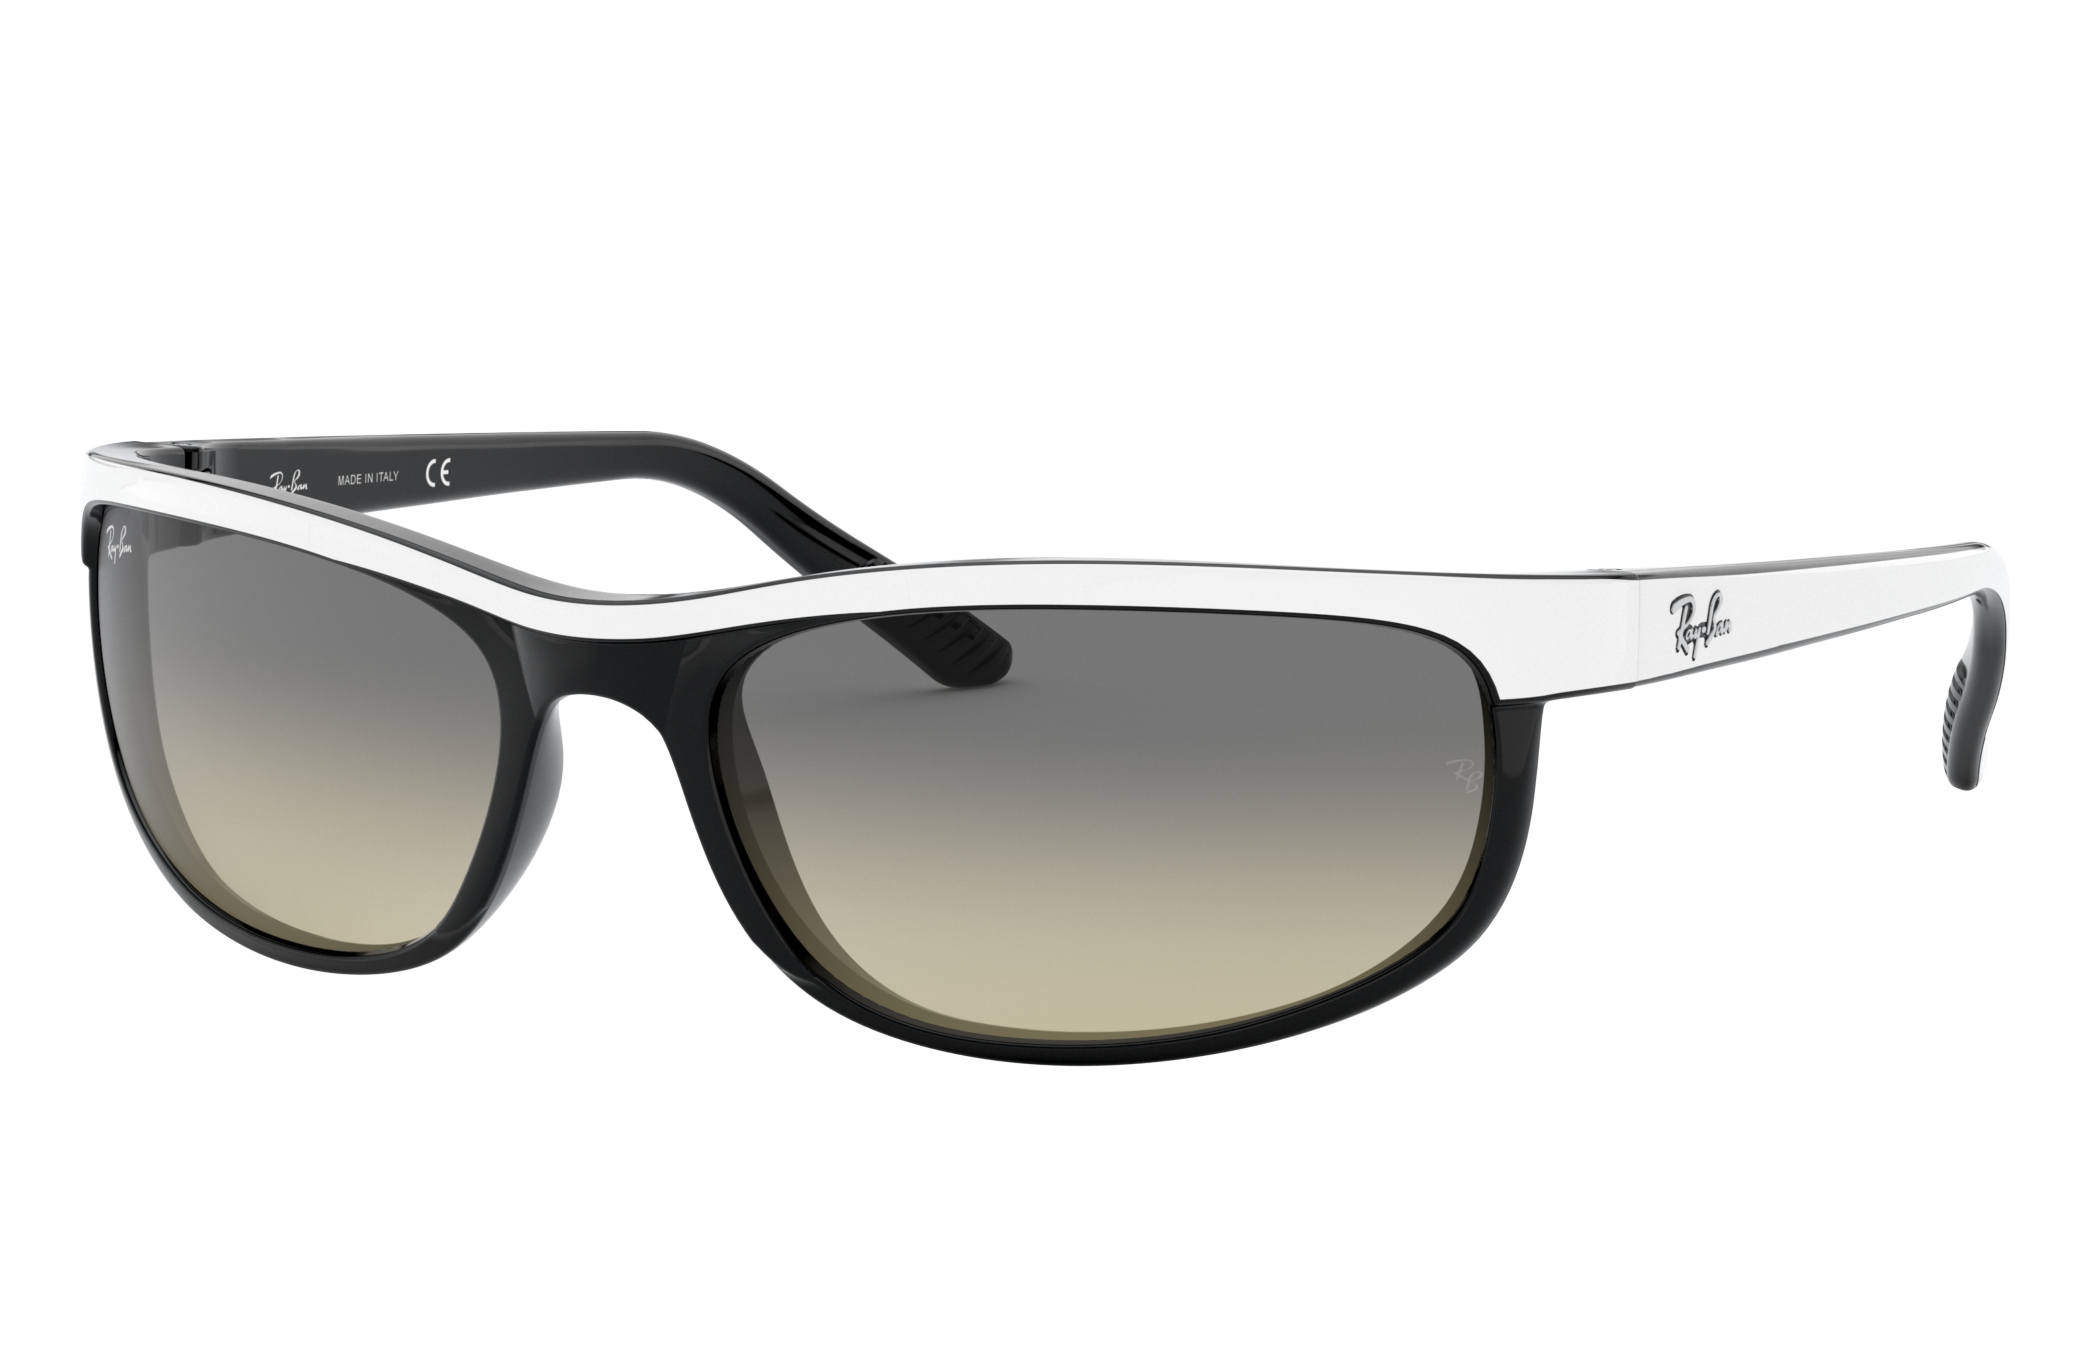 Predator 2 Sunglasses in White and Light Grey | Ray-Ban®